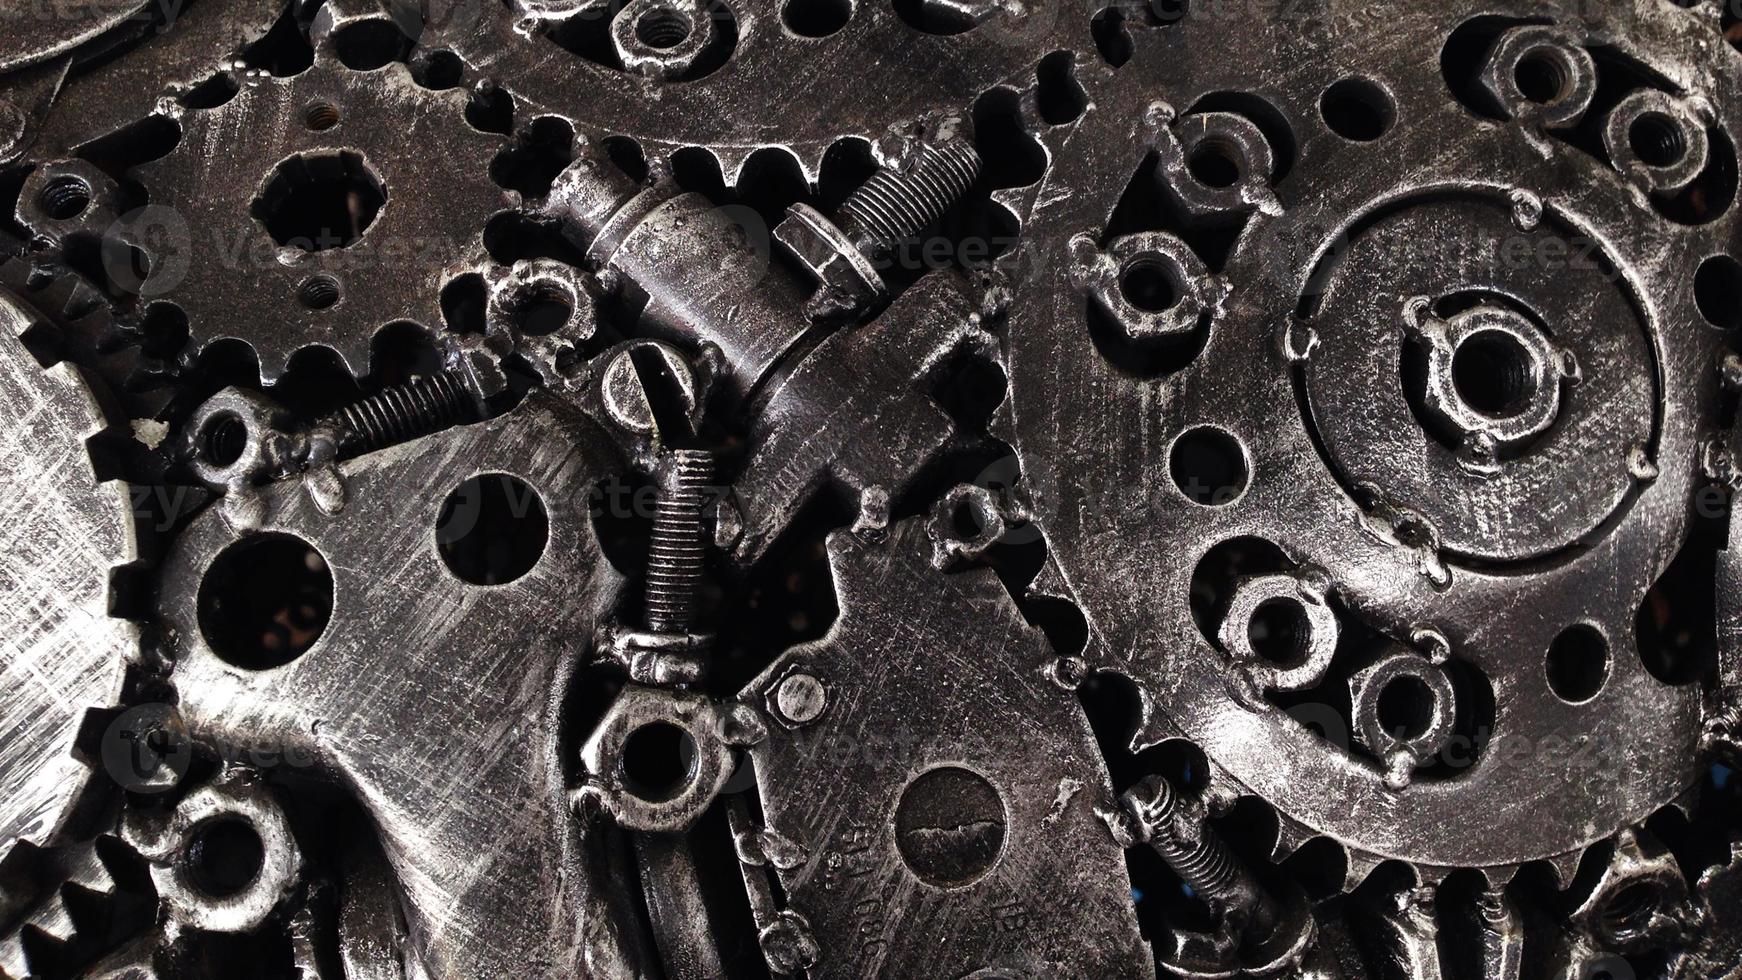 Scrap metal steel textures and patterns creative designs photo